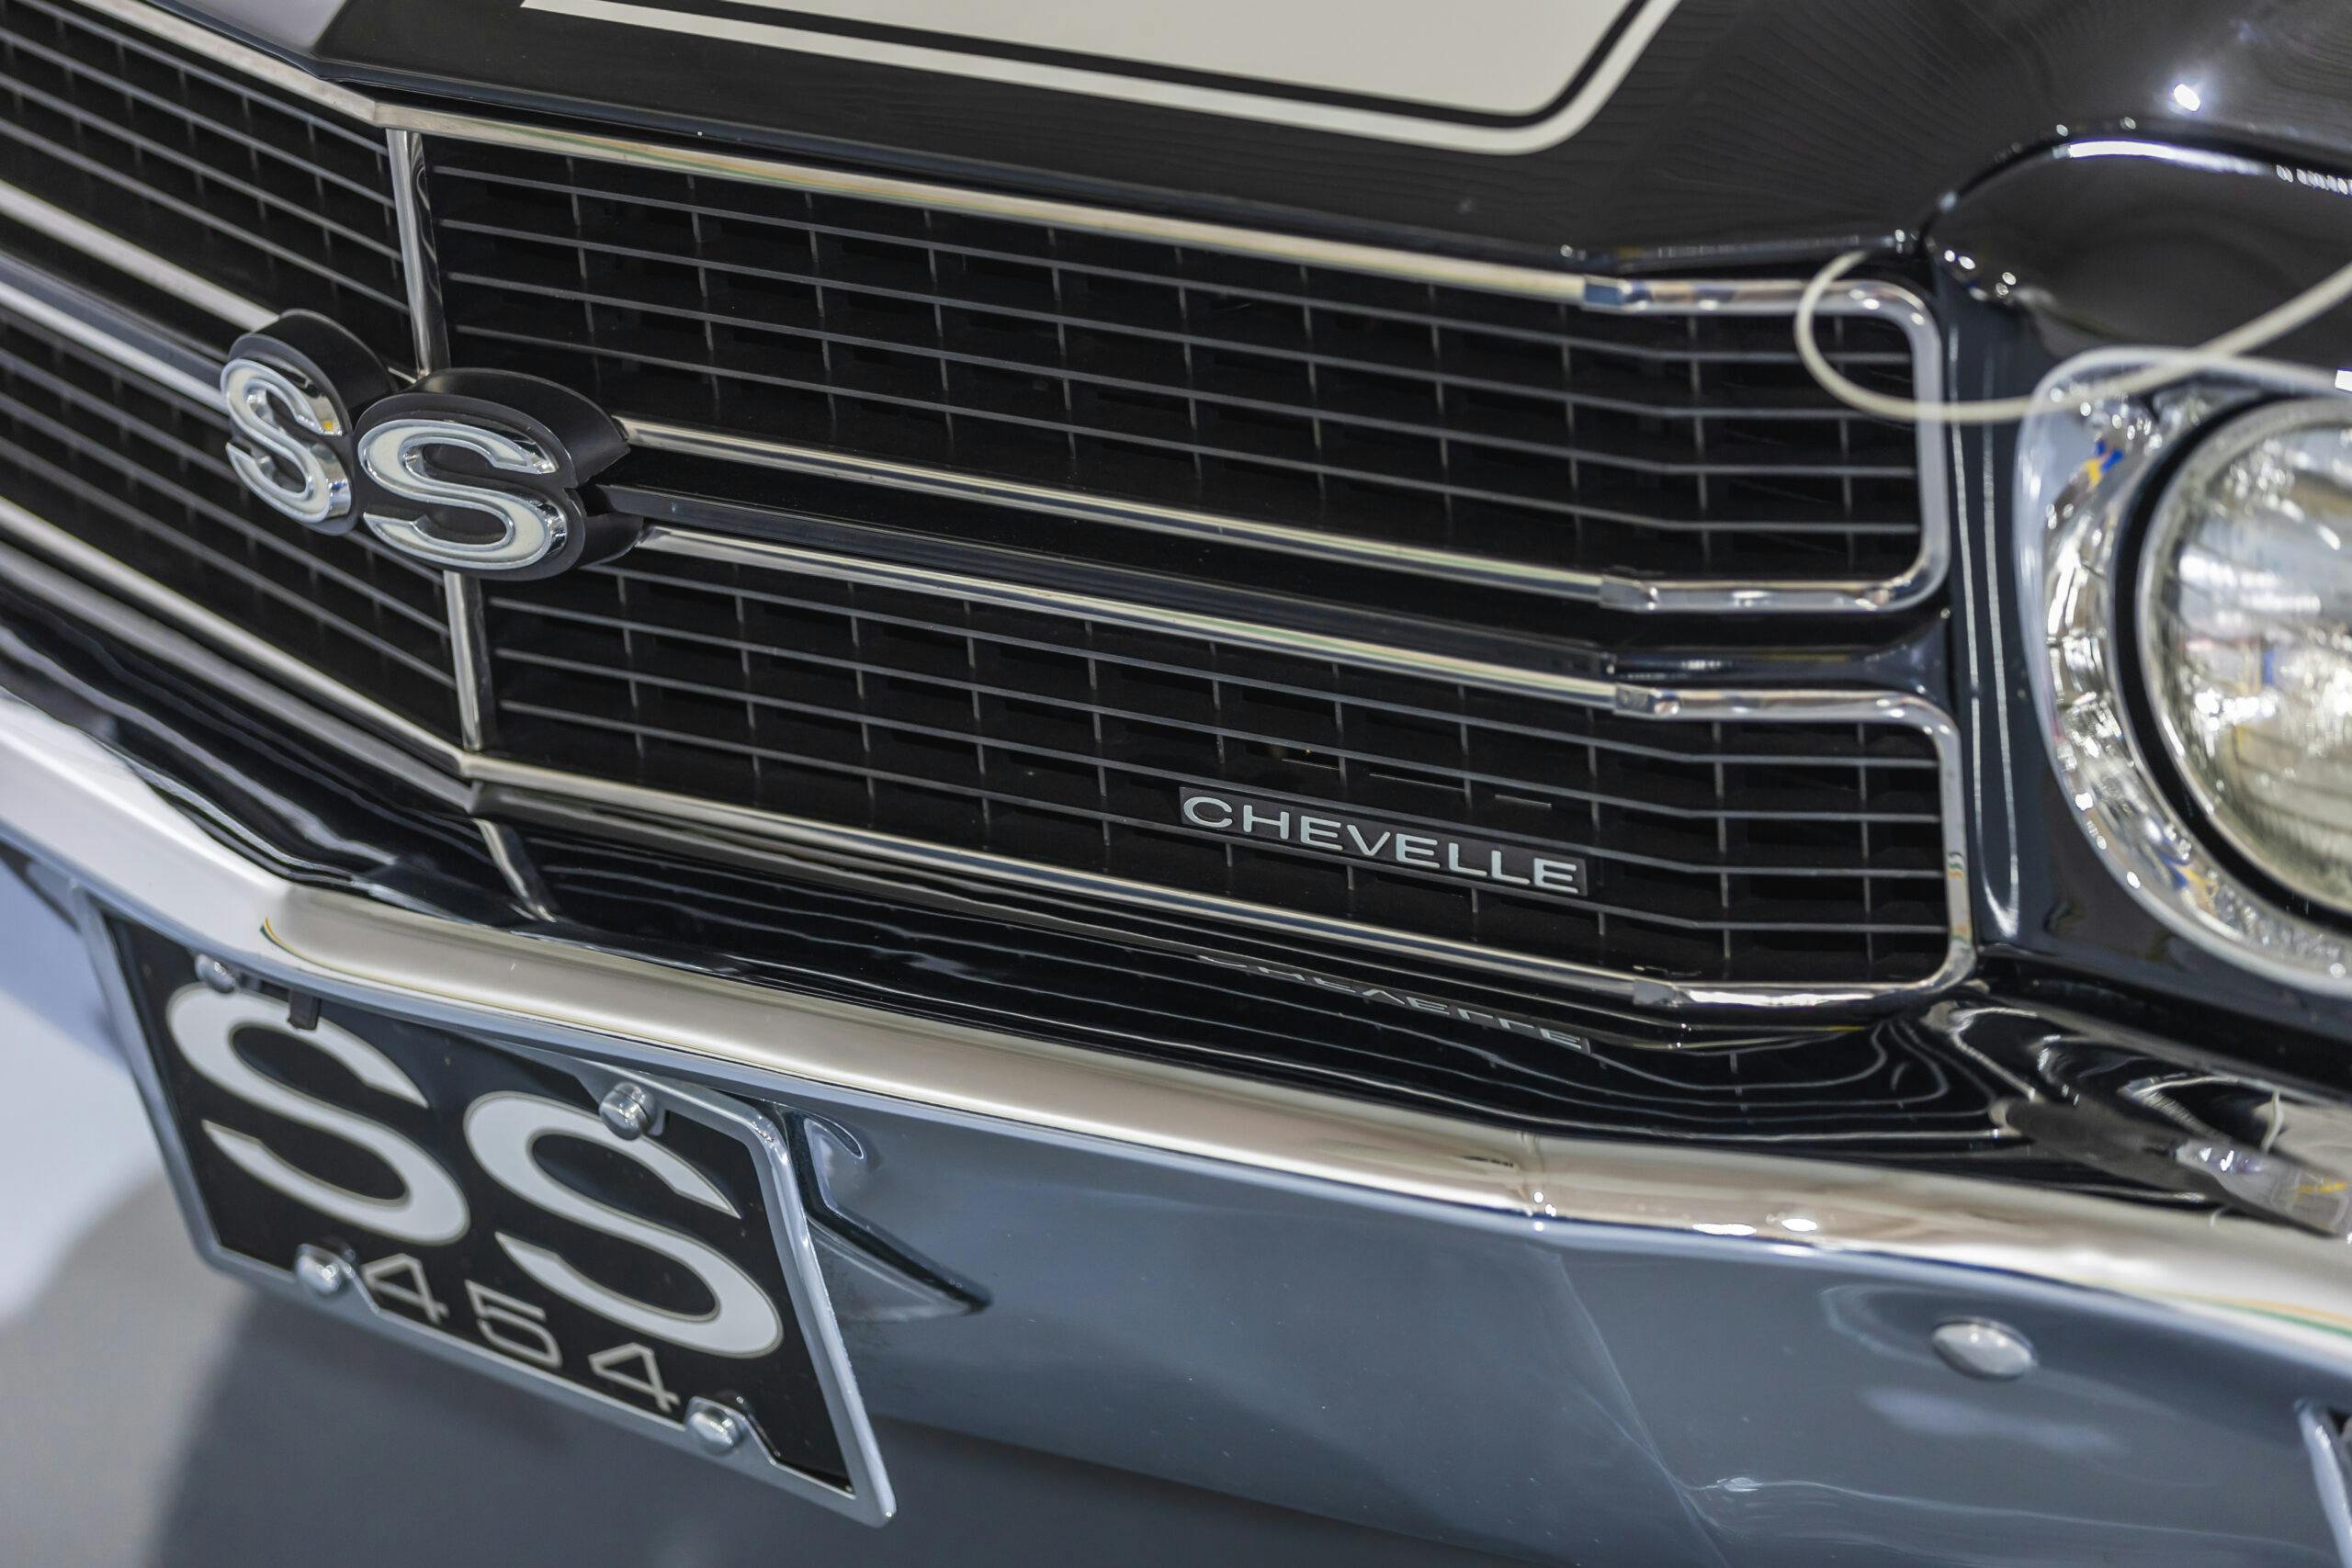 Chevrolet Chevelle grille detail